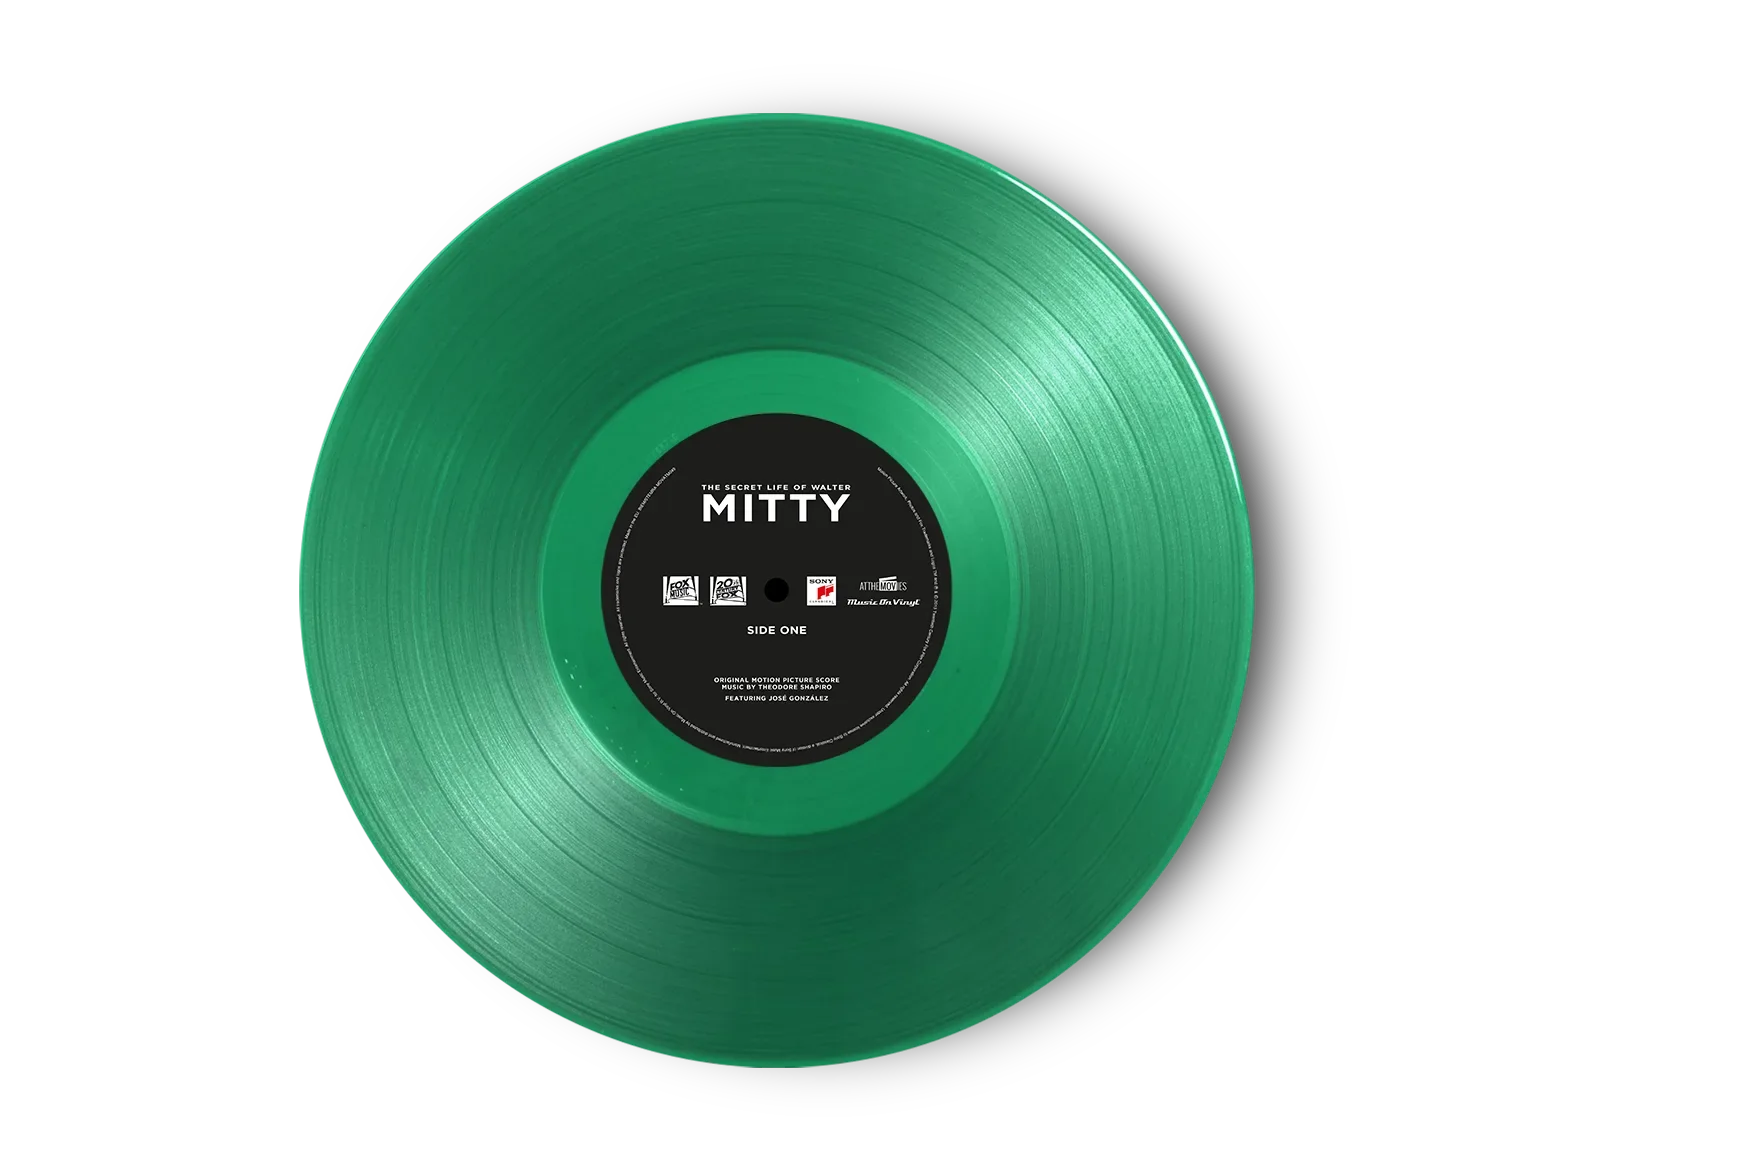 THEODORE SHAPIRO FEAT. JOSÉ GONZÁLEZ - The Secret Life Of Walter Mitty (Original Soundtrack) [Reissue] - LP - 180g Translucent Green Vinyl [JUL 5]